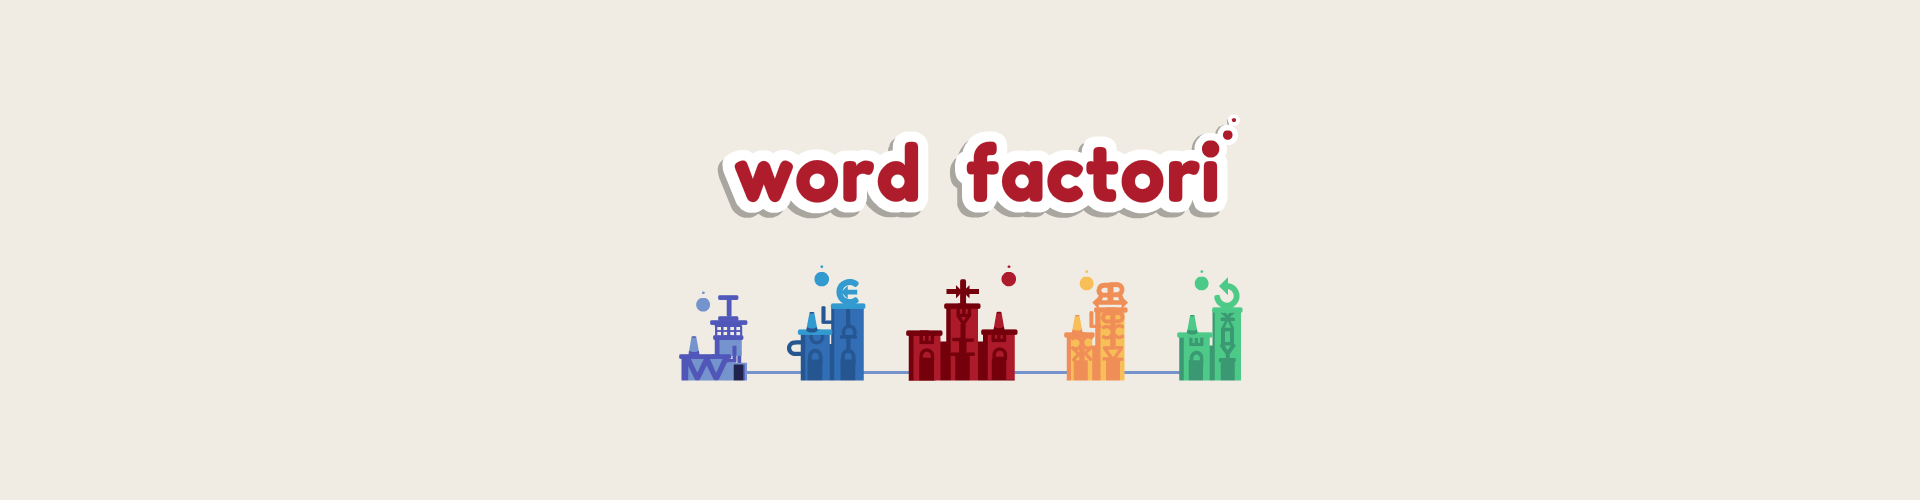 Word Factori (previously known as factori)